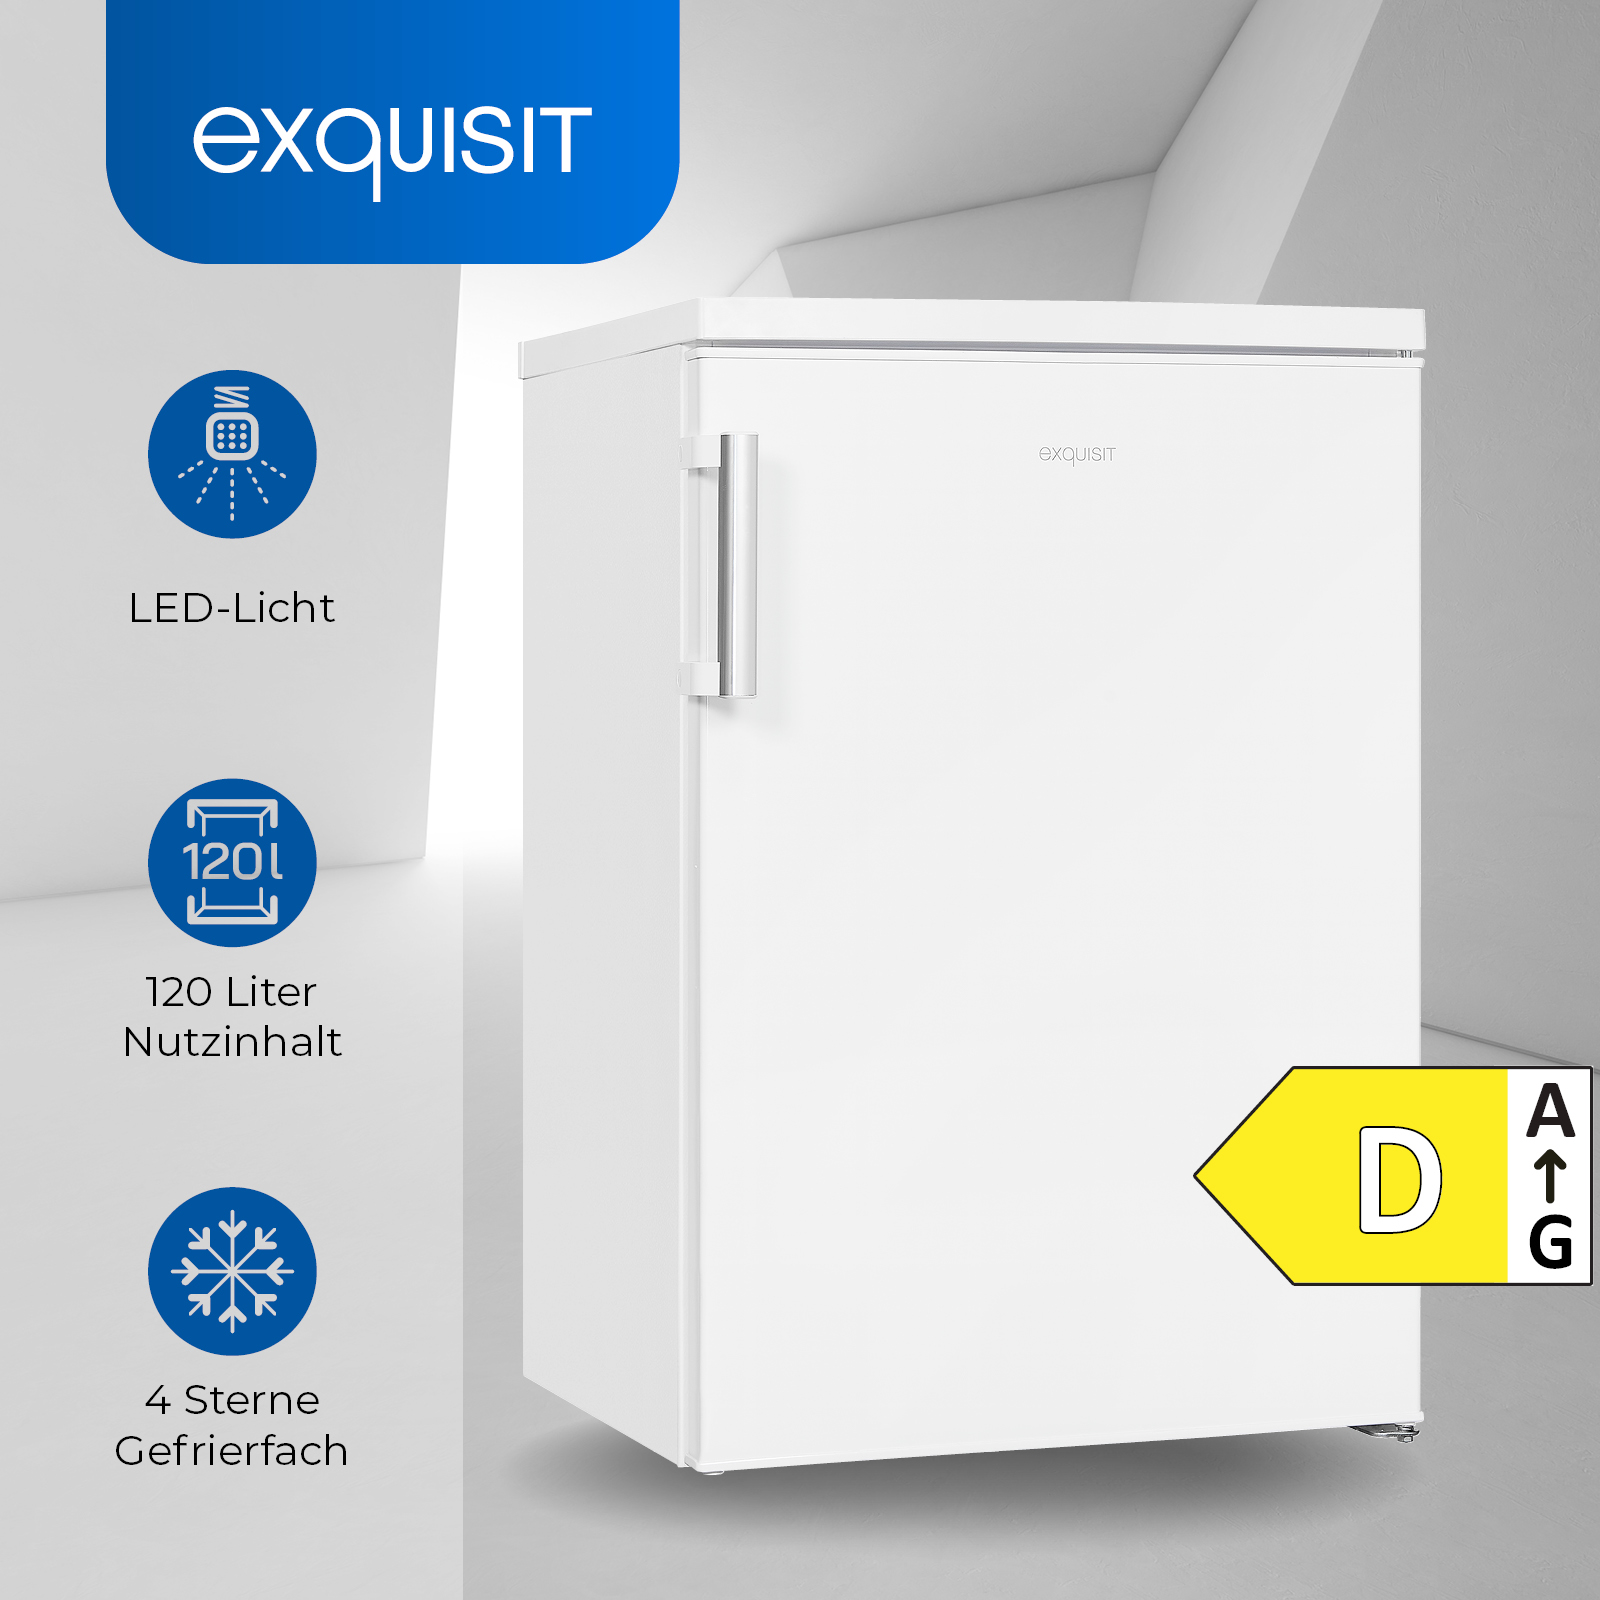 EXQUISIT KS16-4-H-010D weiss Kühlschrank hoch, 850 mm (D, Weiß)